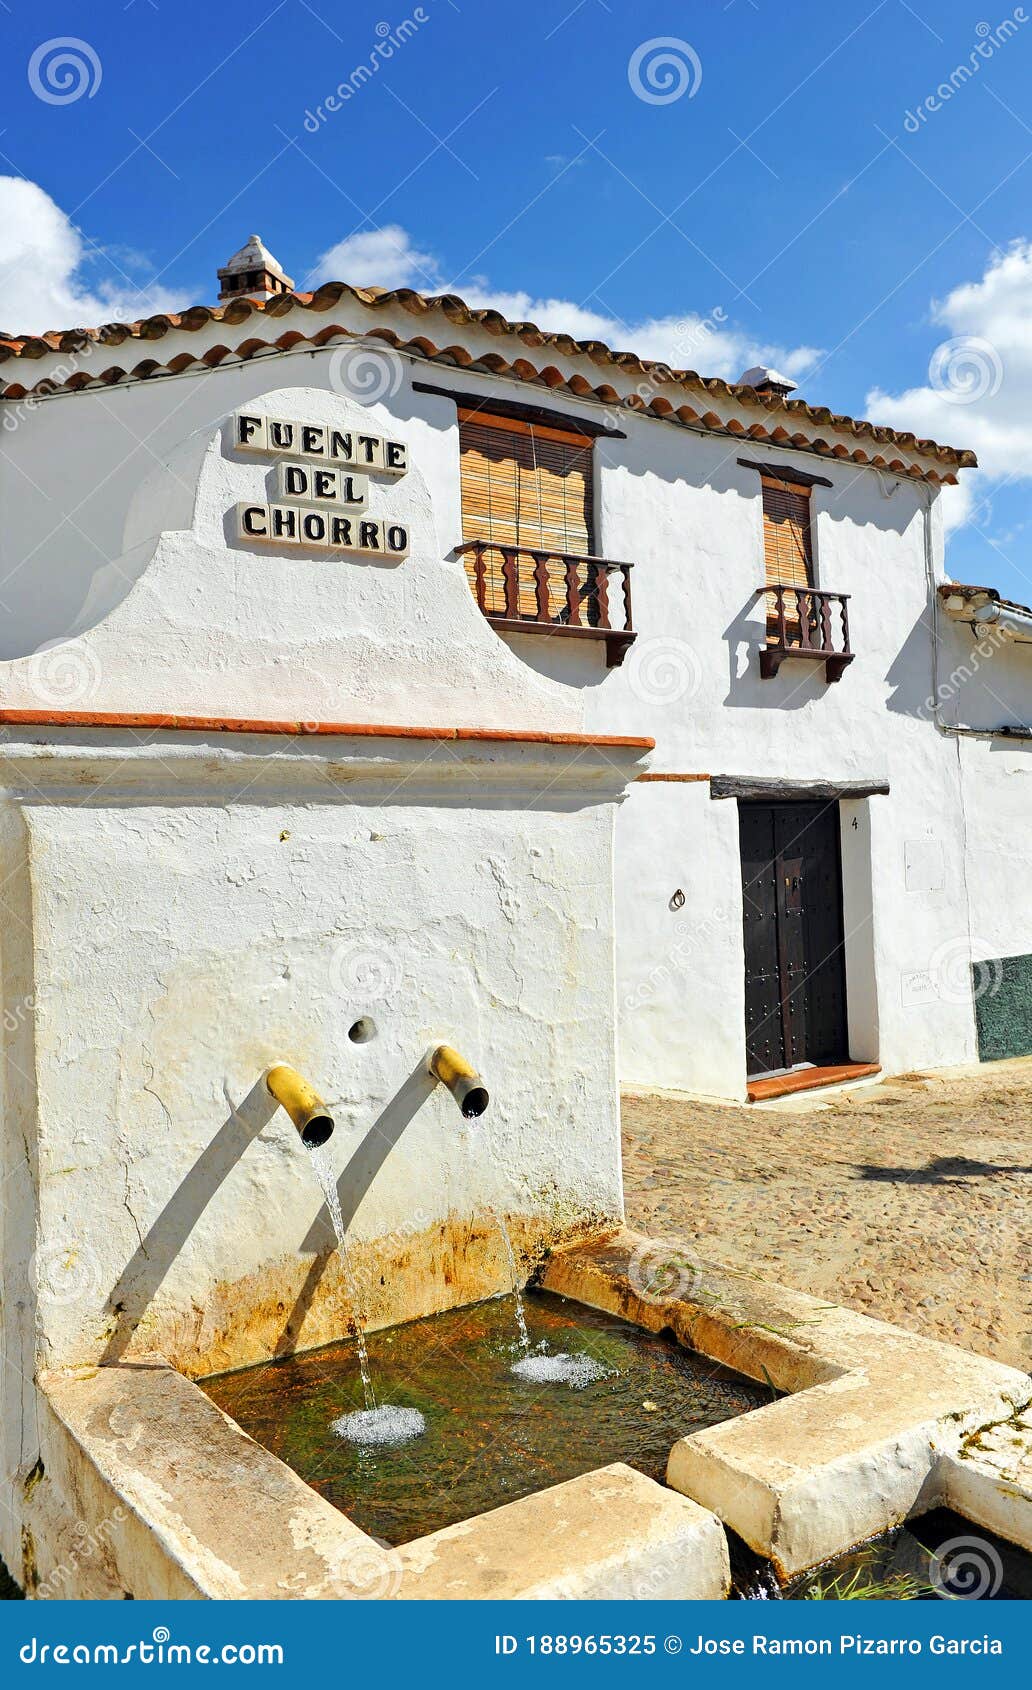 source of the jet -fuente del chorro- drinking water in castano del robledo, province of huelva, spain